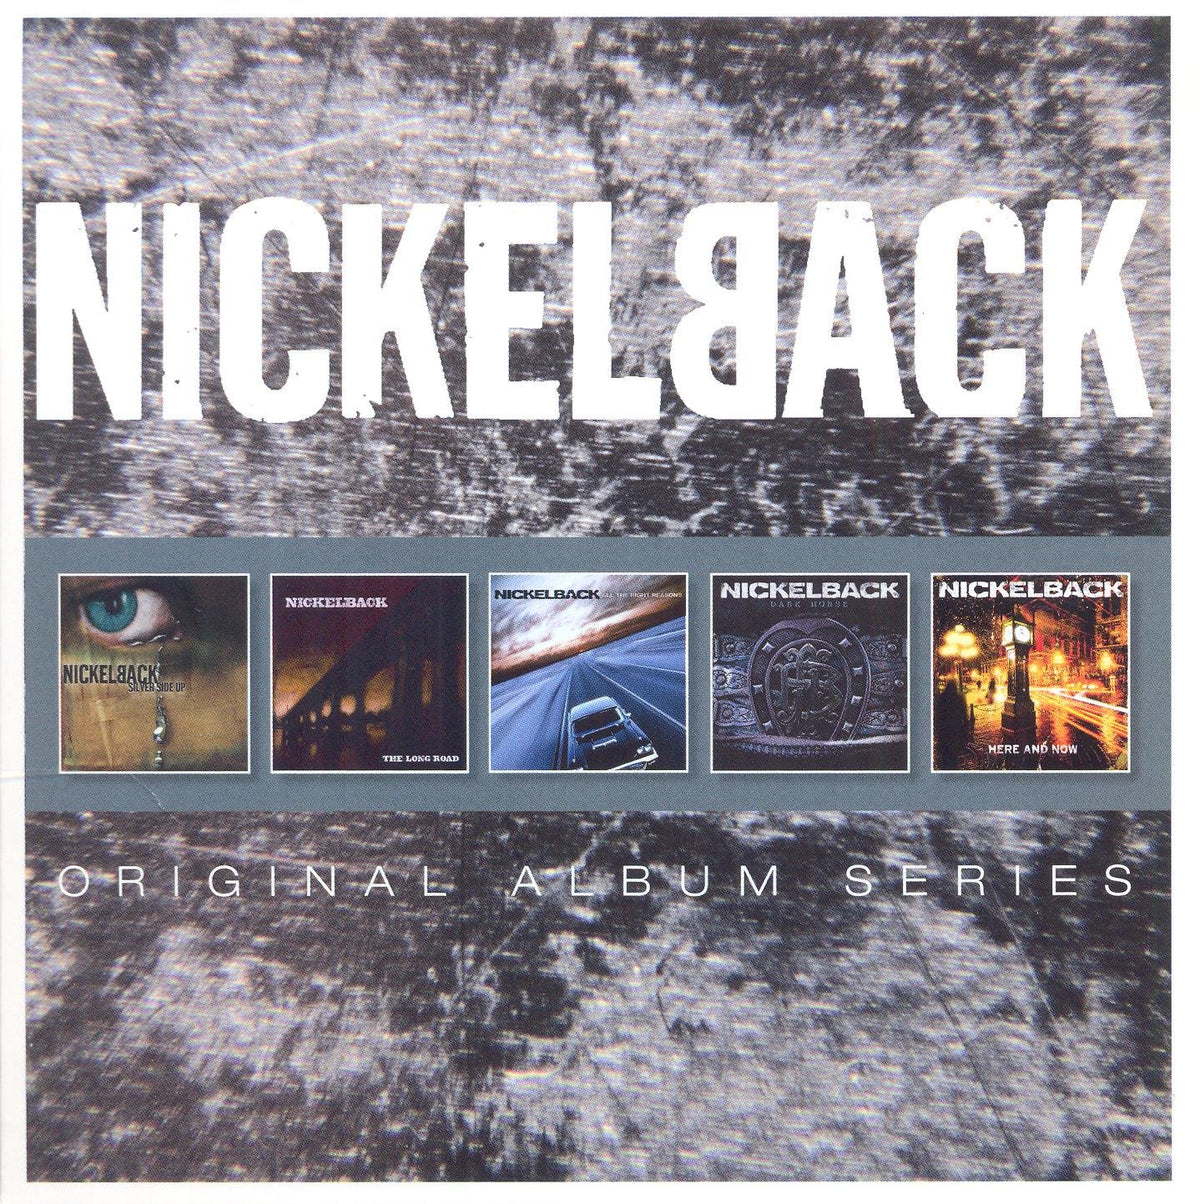 Nickelback - Original Album Series - 5 CD Set